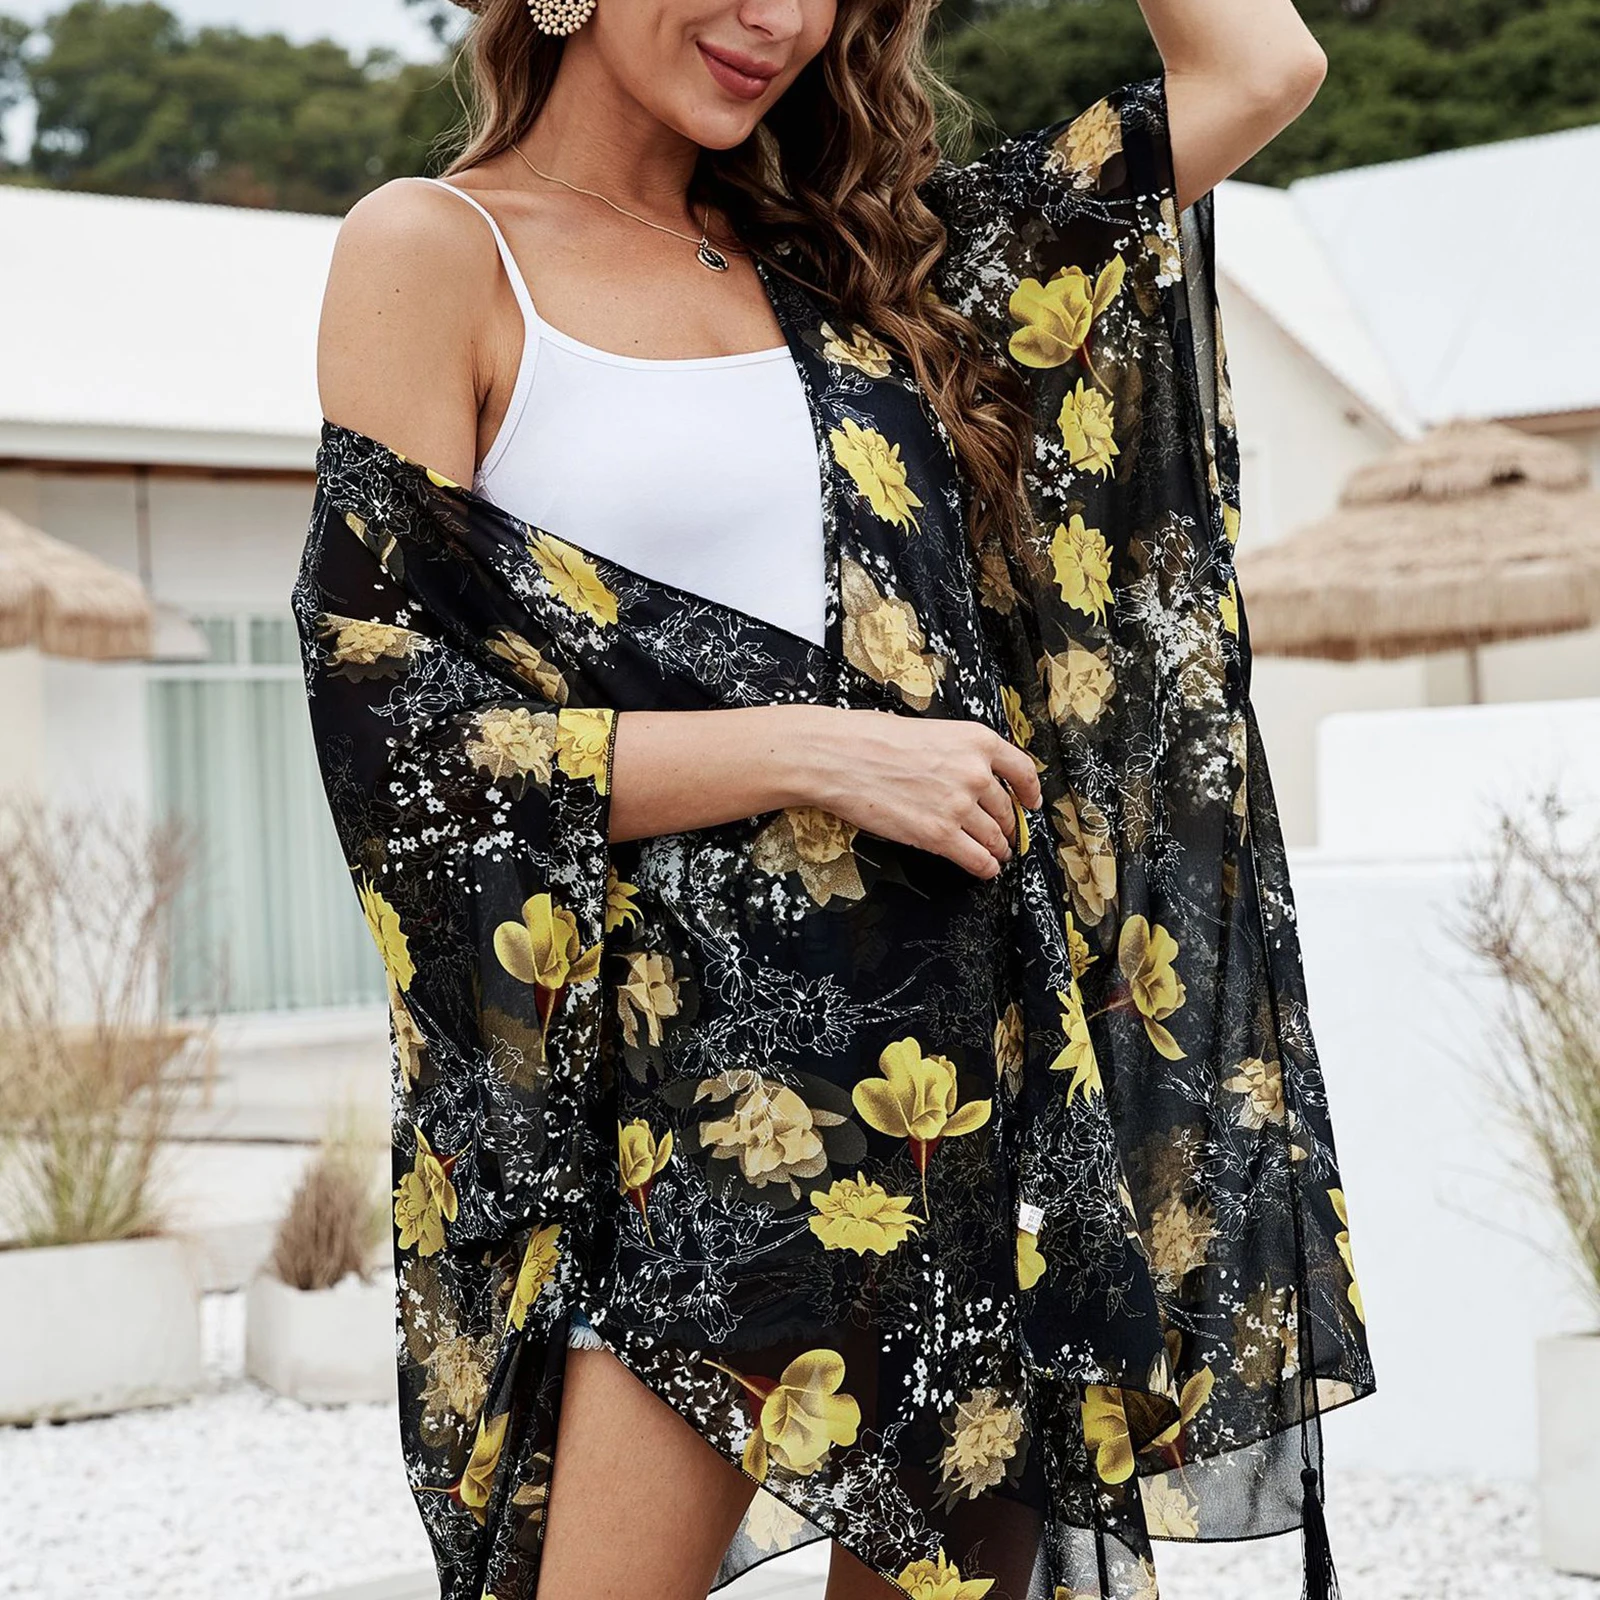 Fudule Womens Fashion Kimono Cardigans Plus Size Chiffon Summer Beach Cover Up Kimono Long Shawl Capes Tops Beachwear 